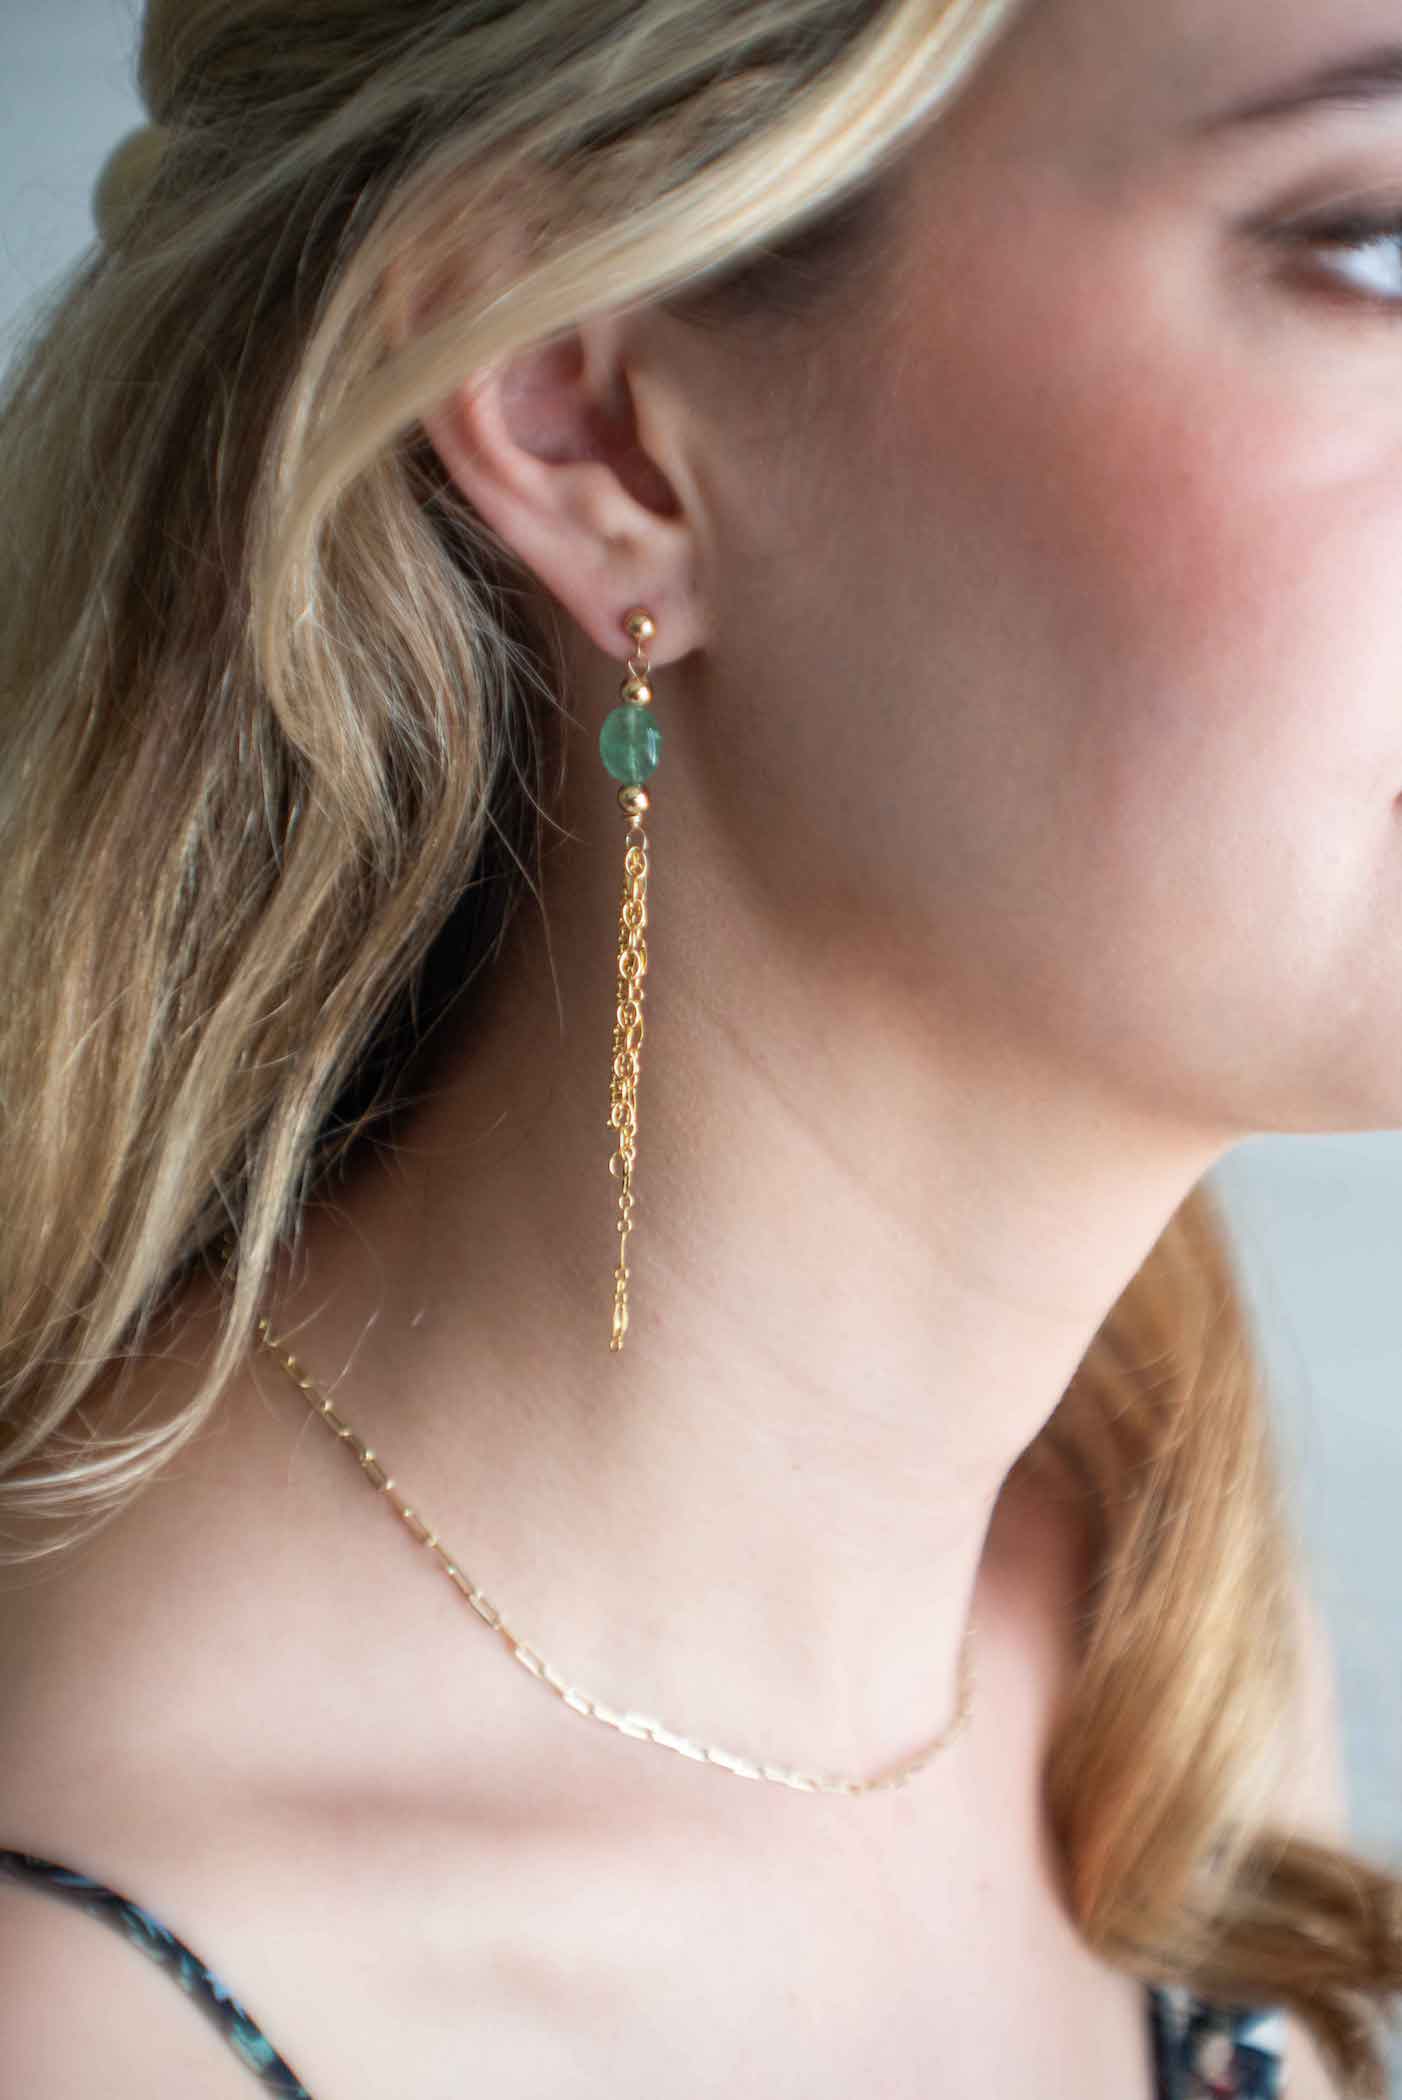 Gemstone Tassel Earrings long Delicate Gold Earrings Gift for Women Best Gifts for Girls